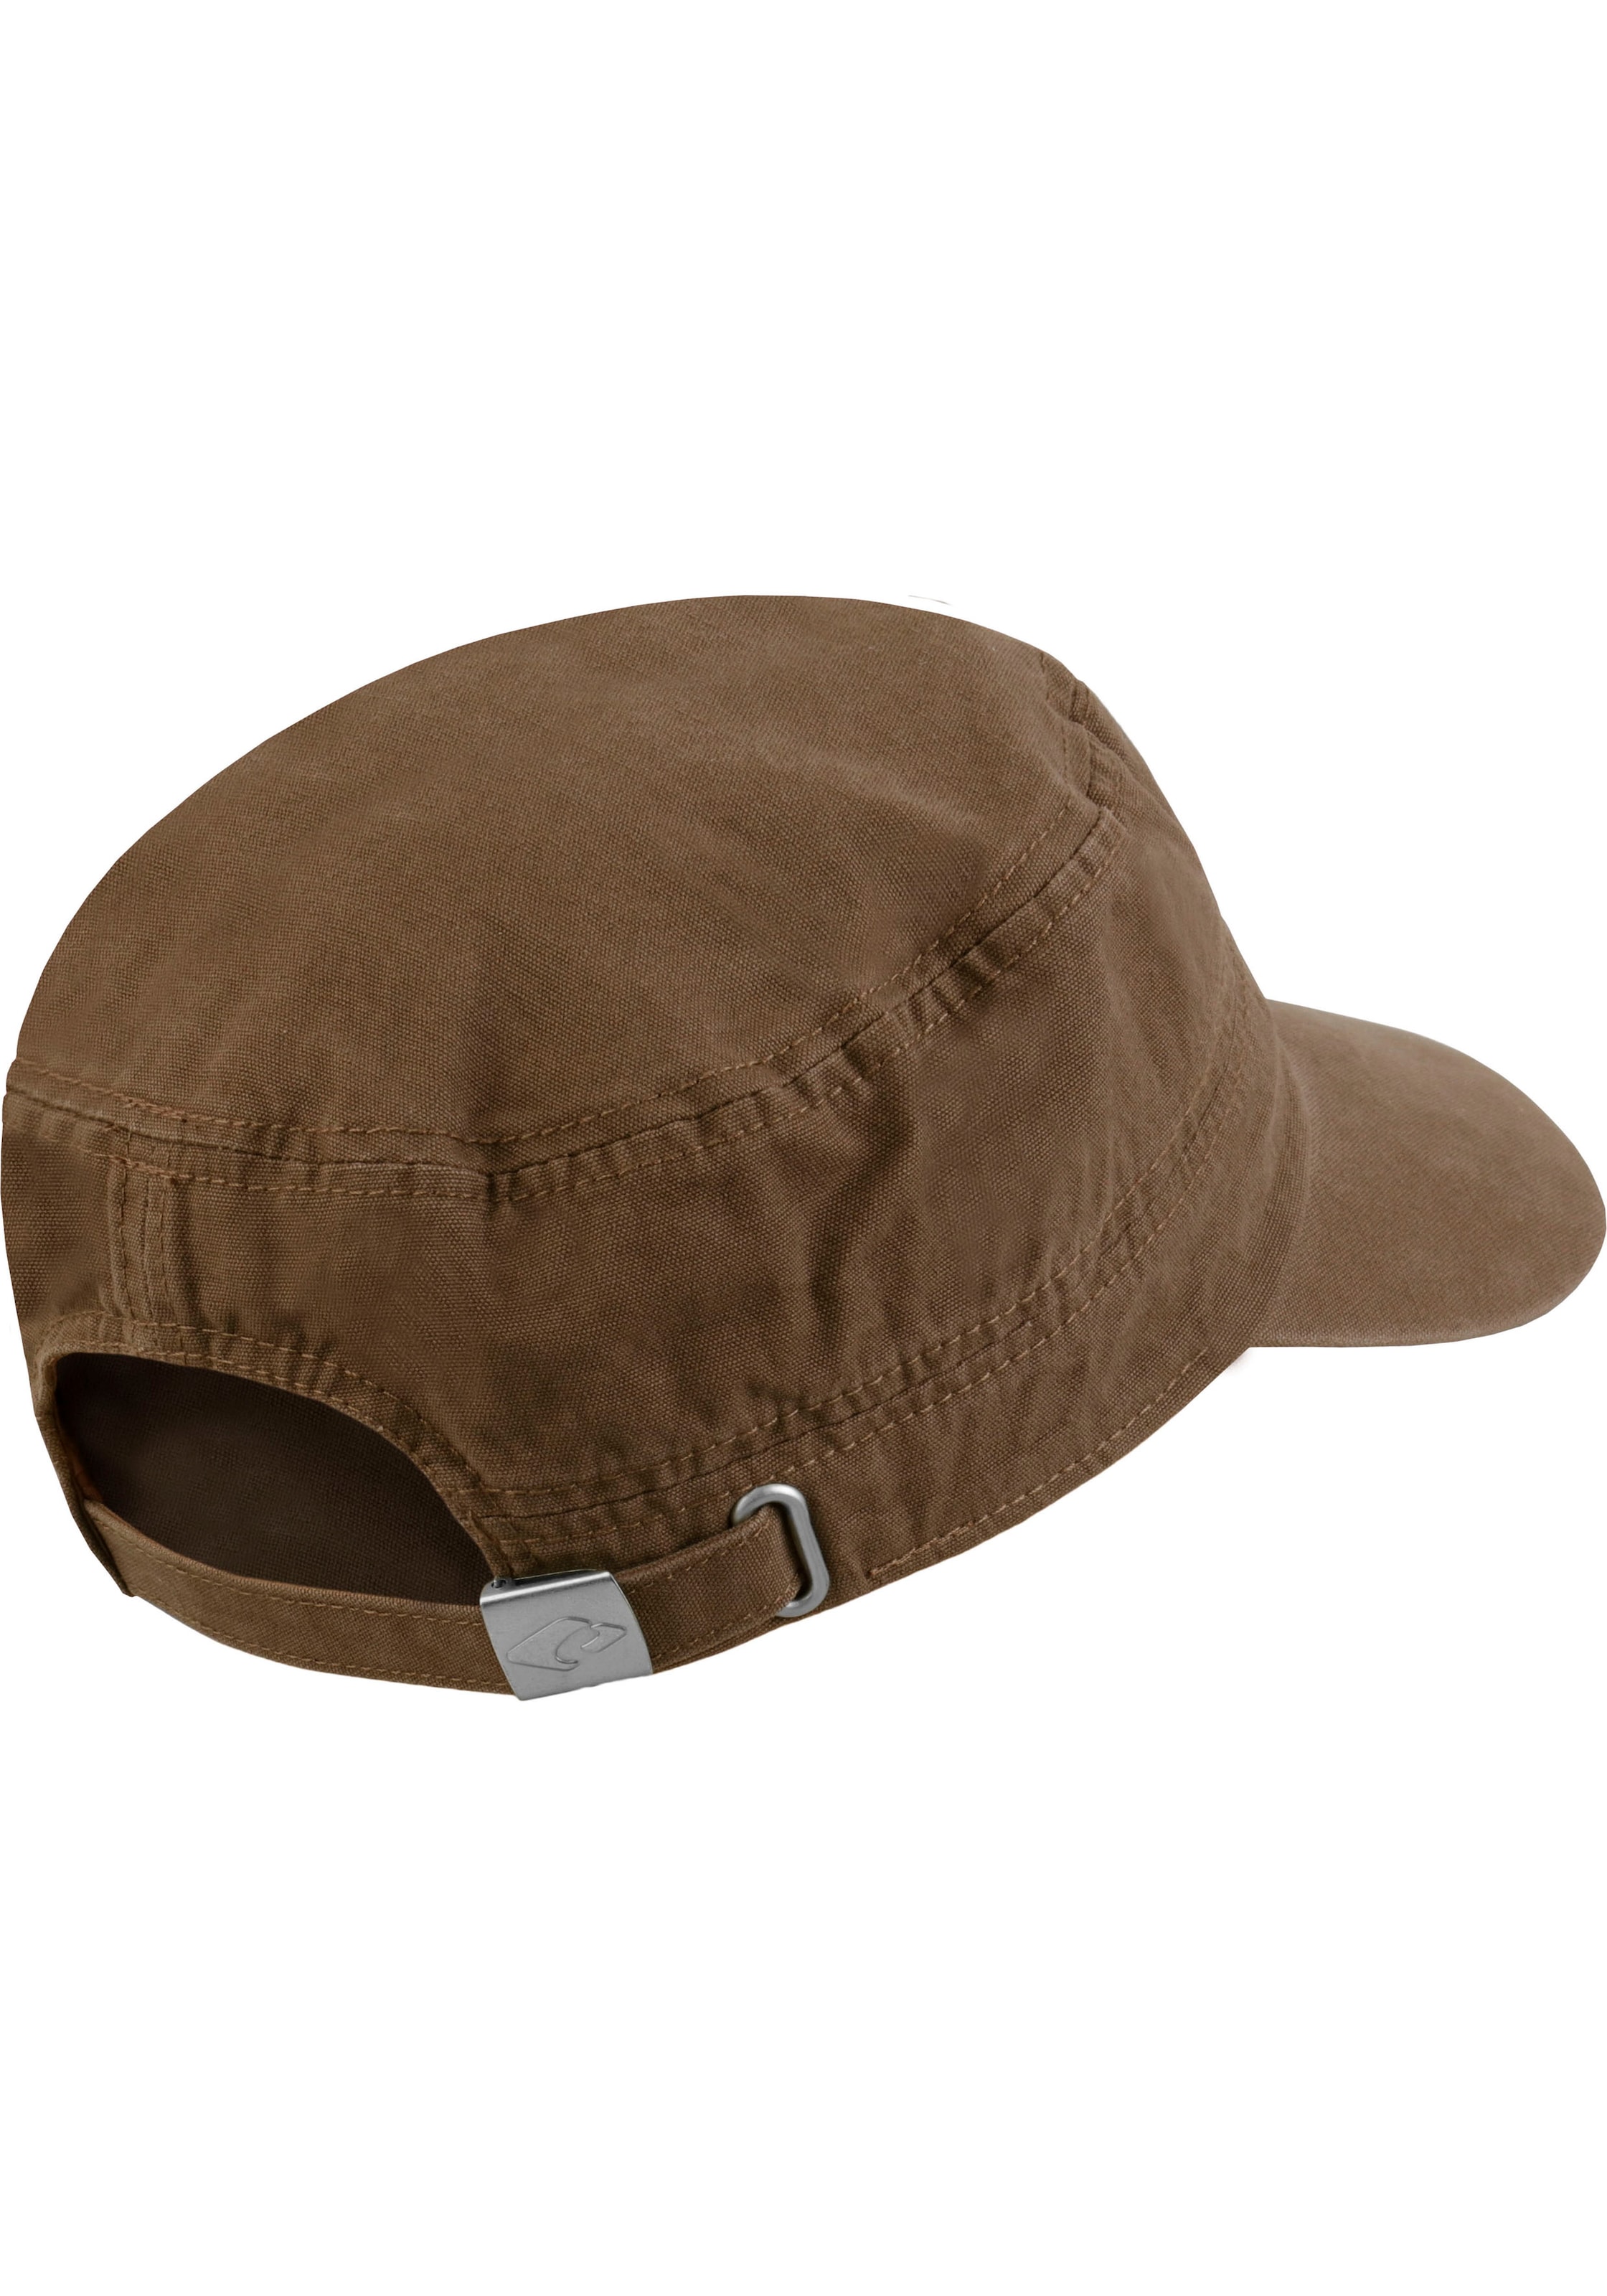 chillouts Army Cap im Hat«, Cap Raten auf »Dublin bestellen | OTTO Mililtary-Style